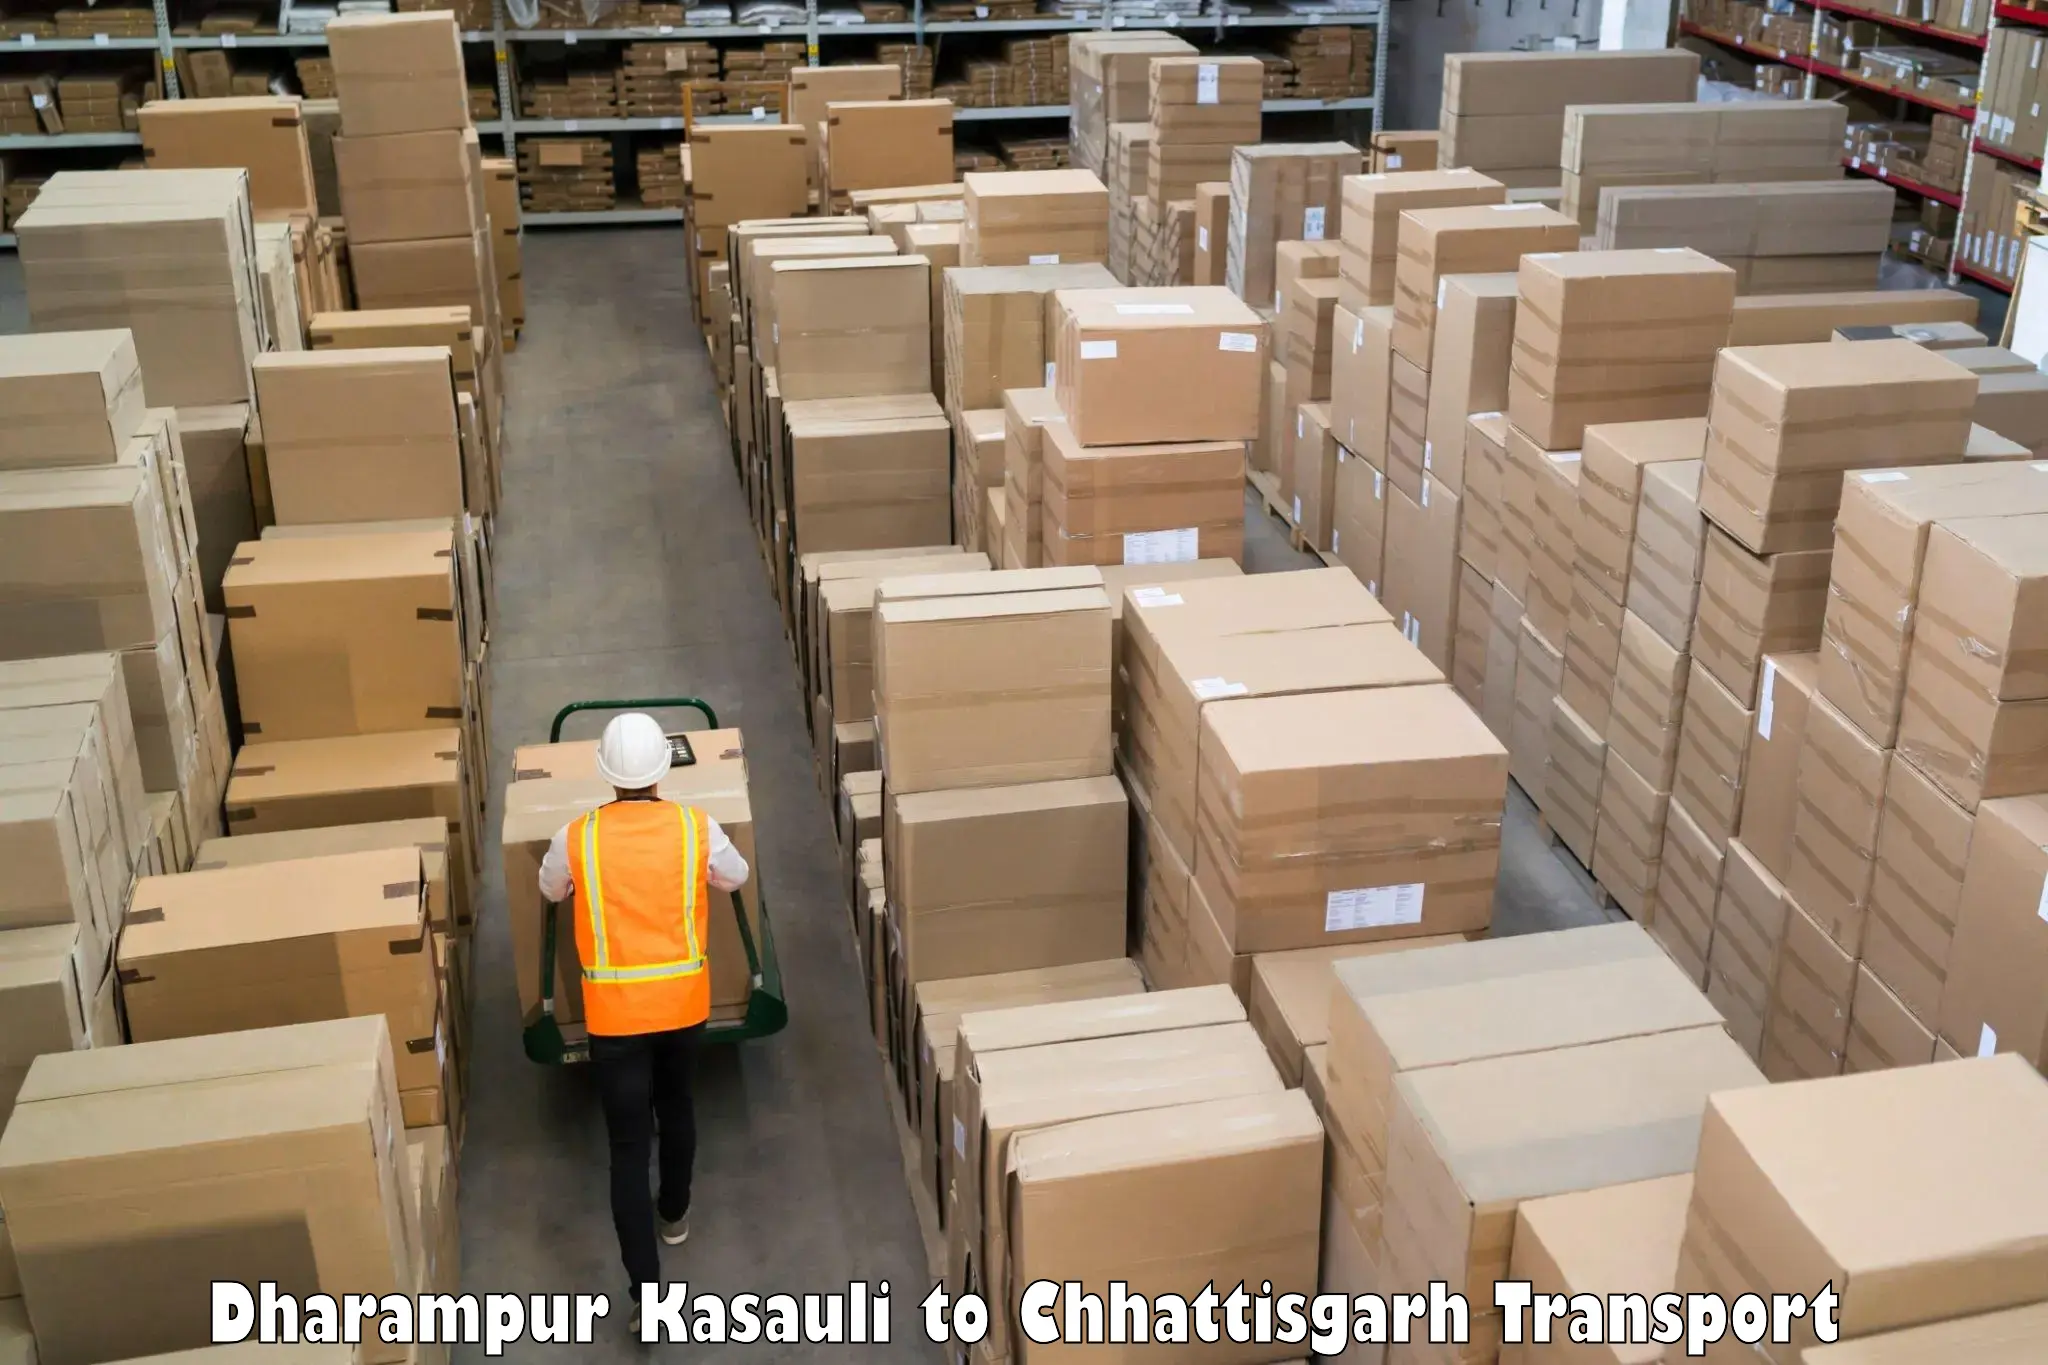 Truck transport companies in India Dharampur Kasauli to Balod